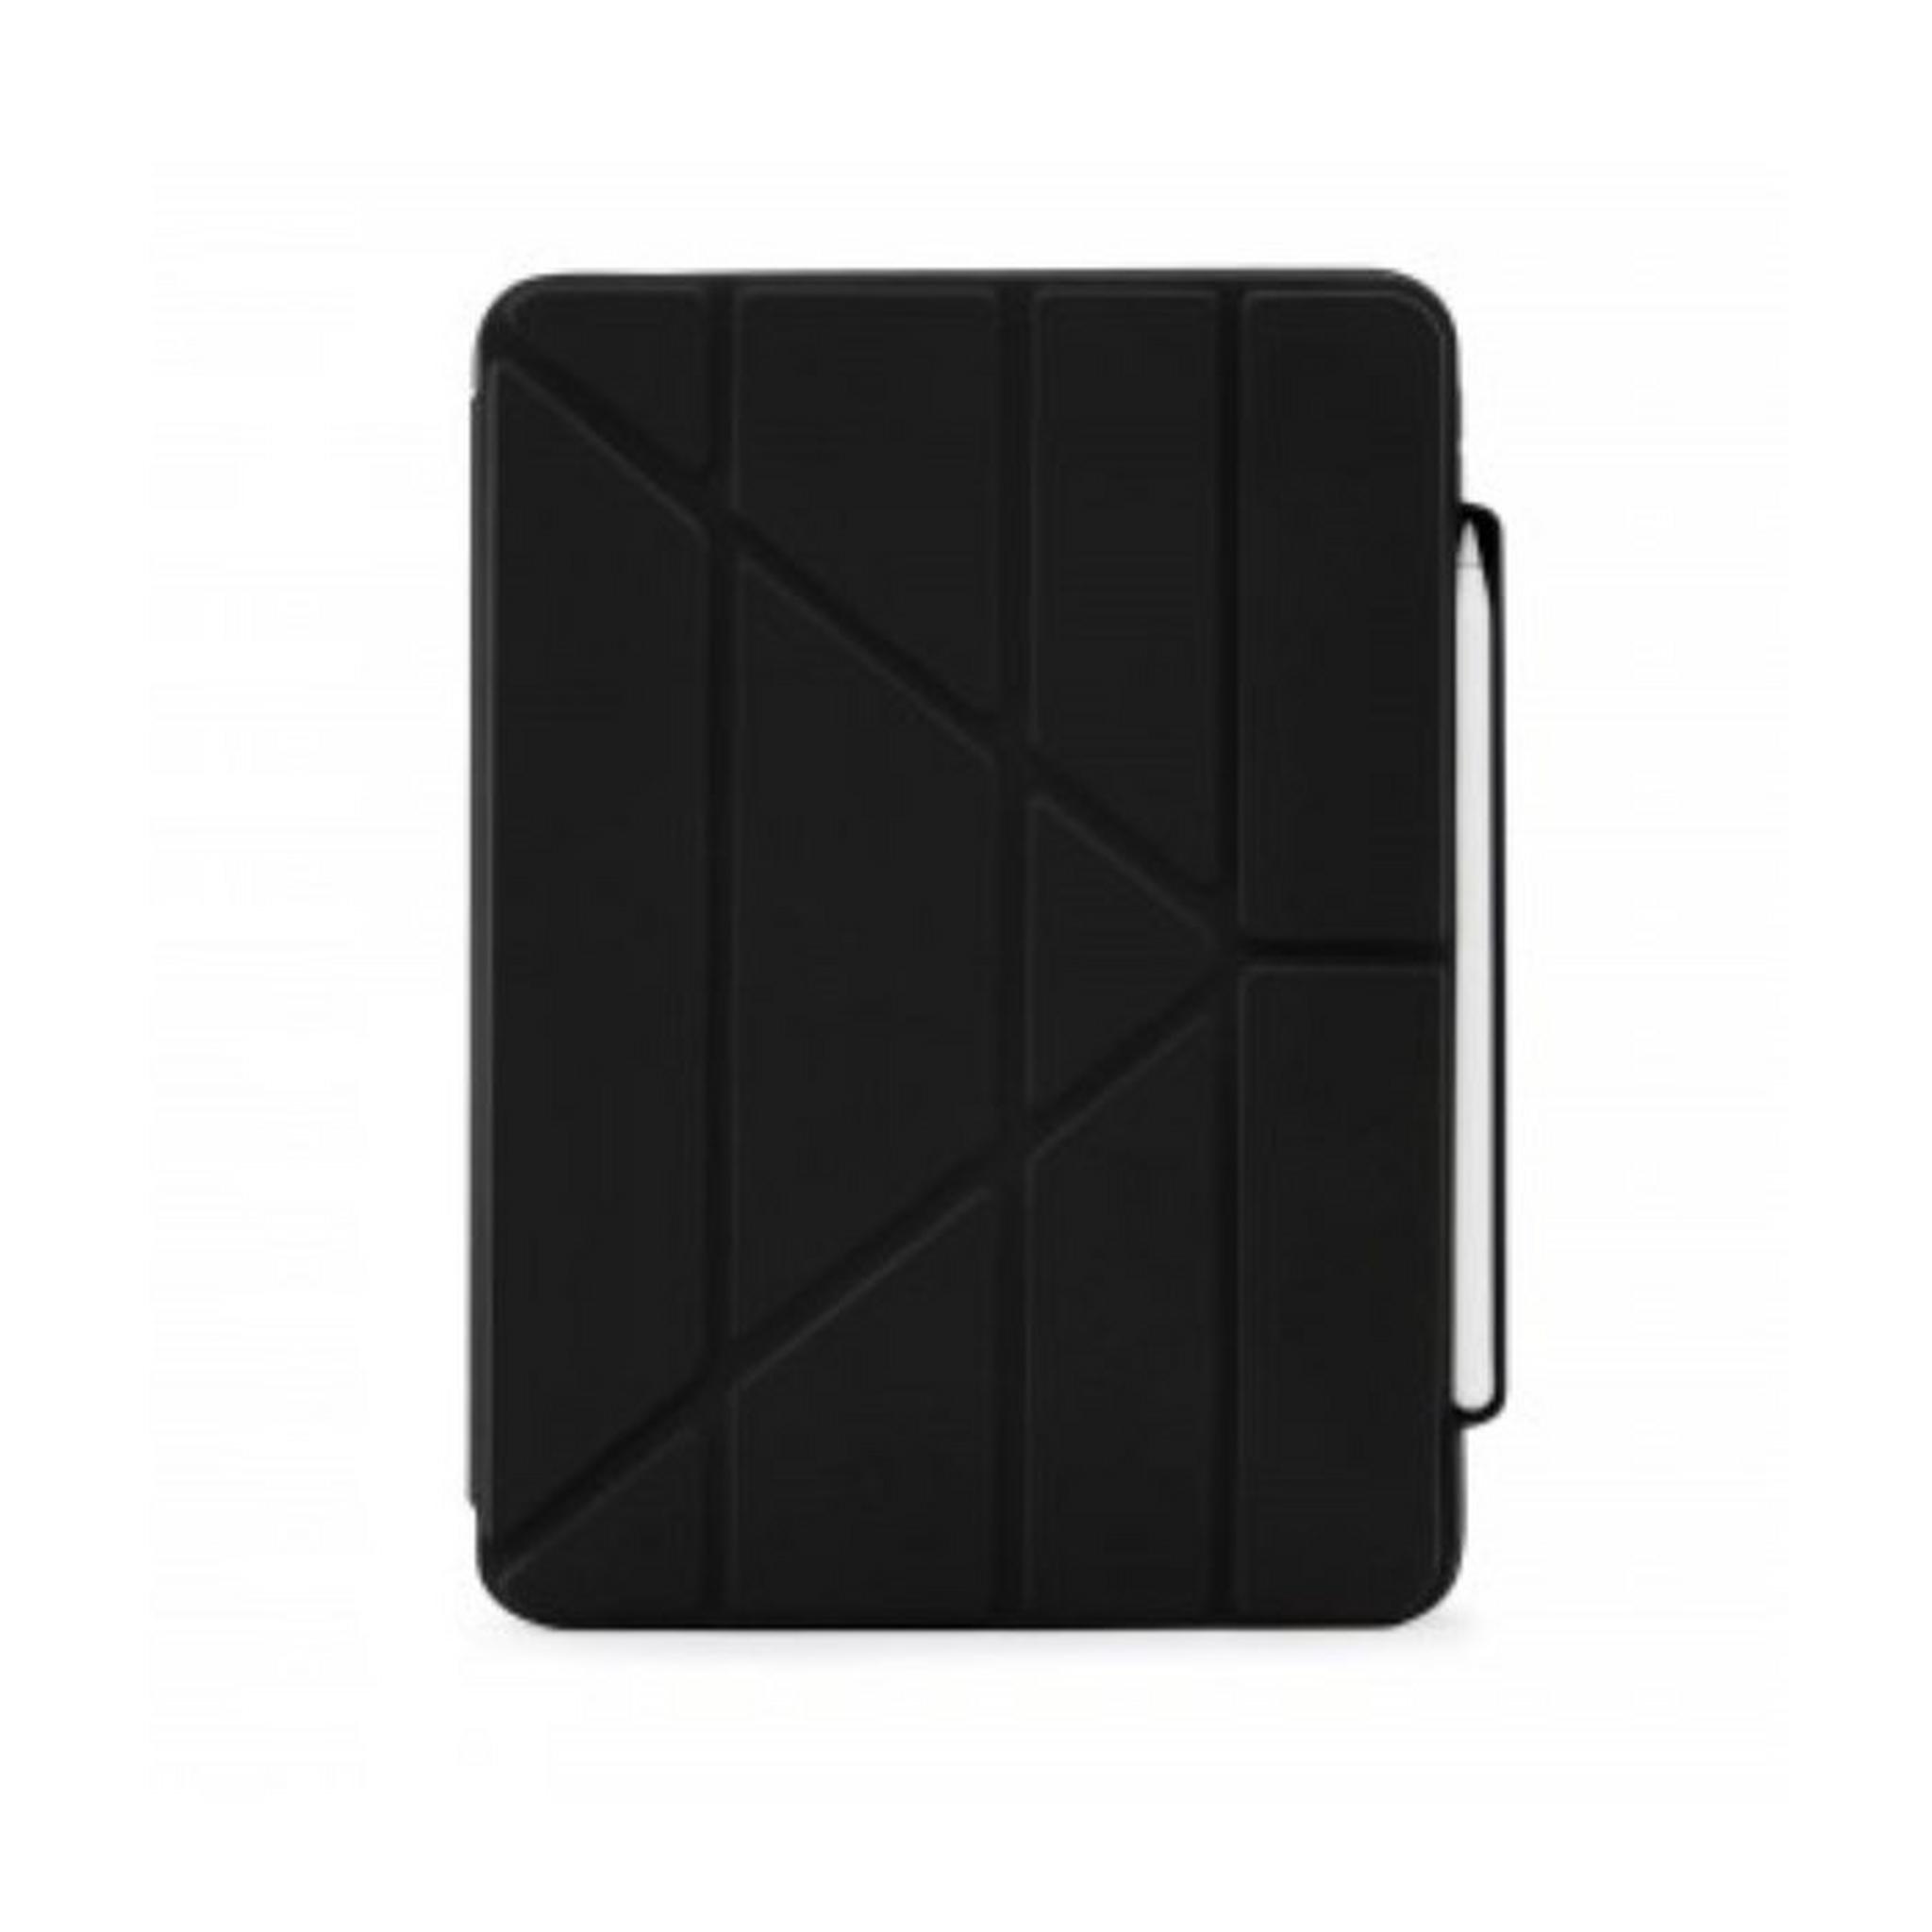 iPad Air 4 10.9 inch (2020) Origami Pencil Case - Black